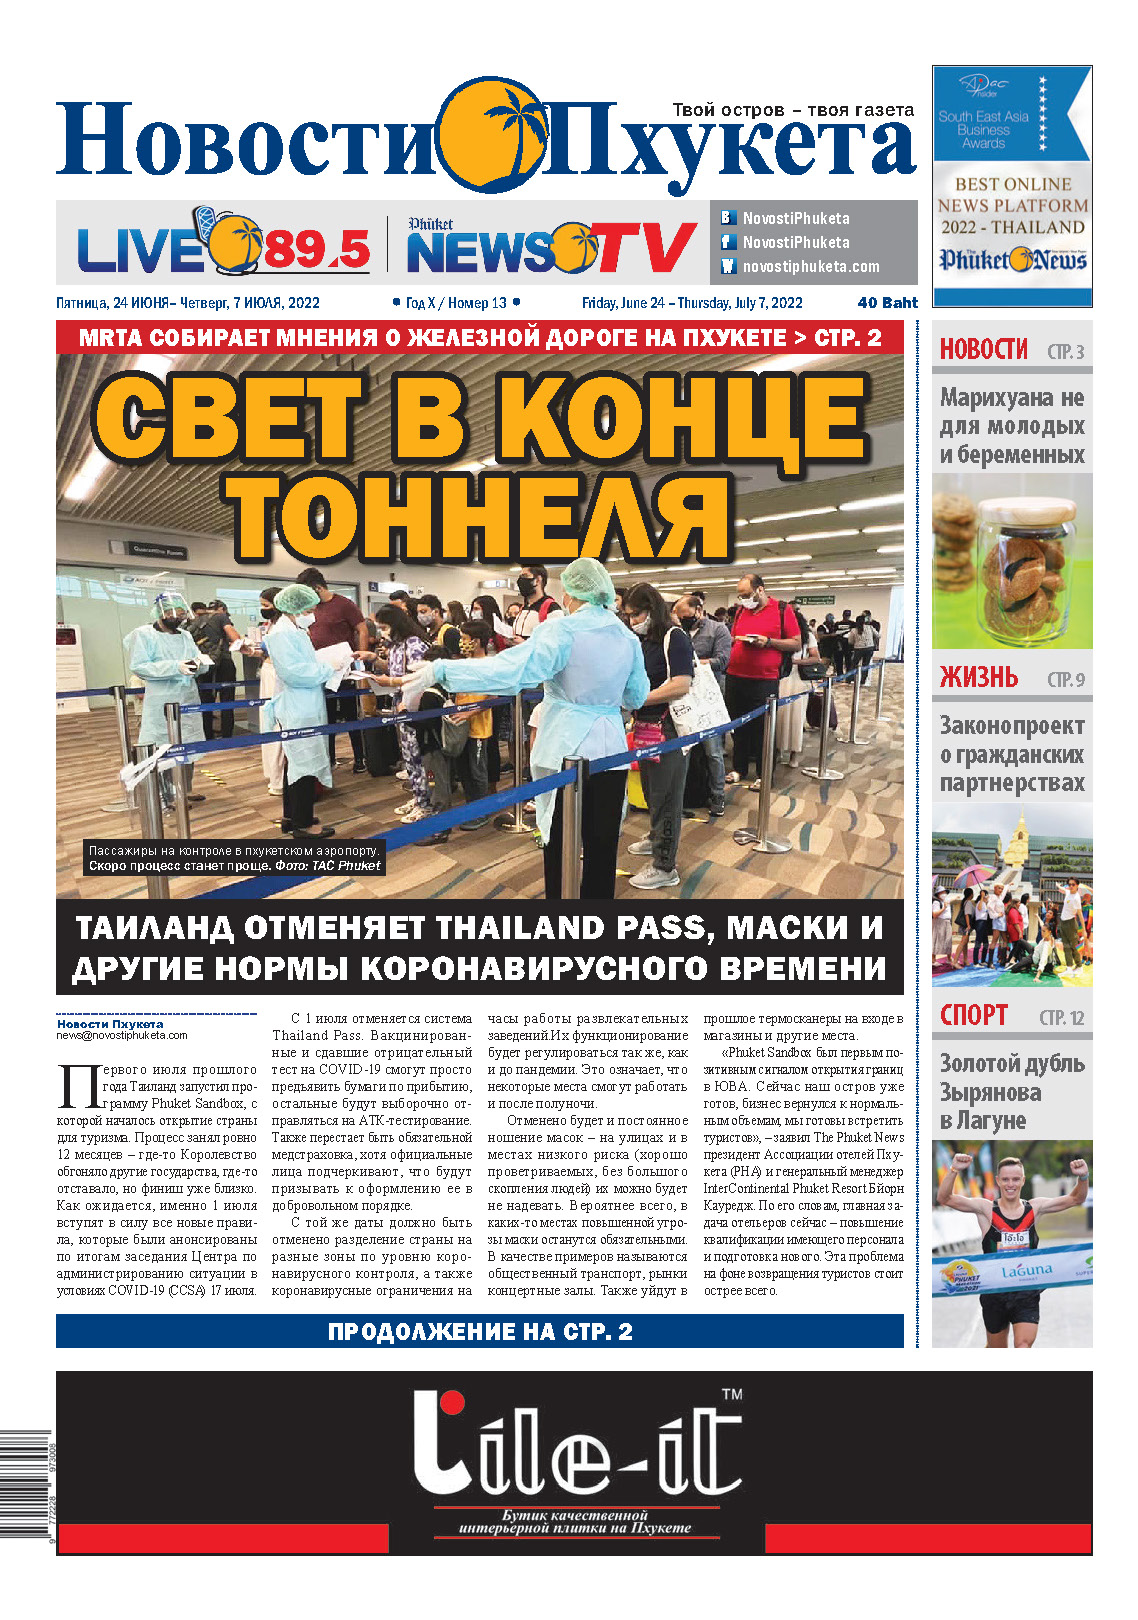 Phuket Newspaper - https://www.novostiphuketa.com/archive/24-06-2022/24-06-2022_Page_01.jpg